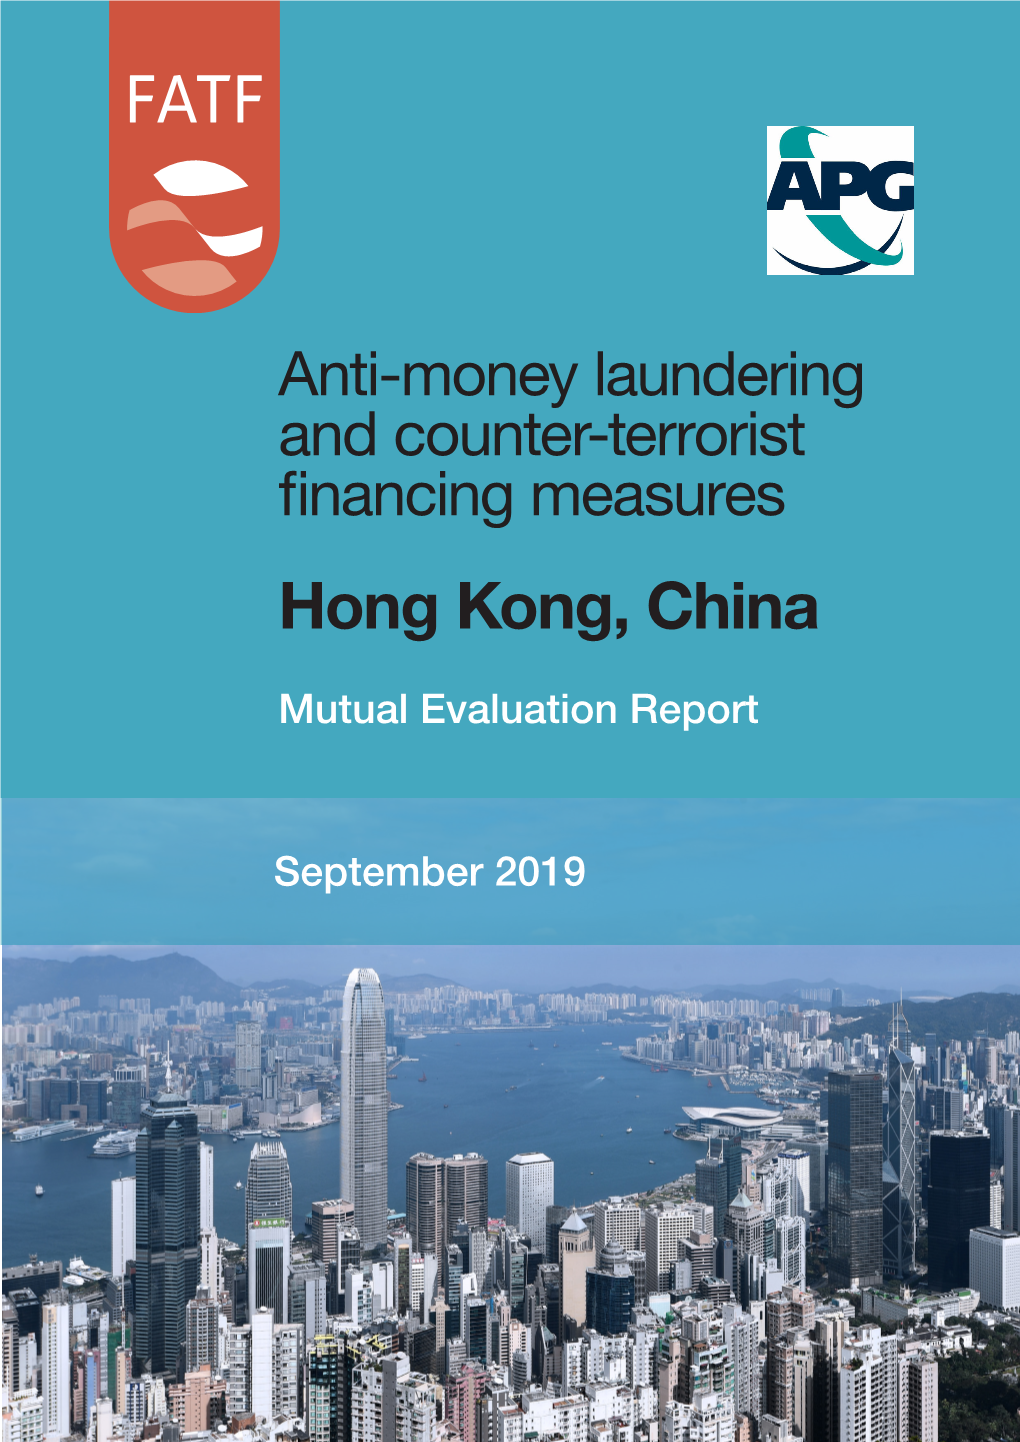 Mutual Evaluation Report for Hong Kong, China